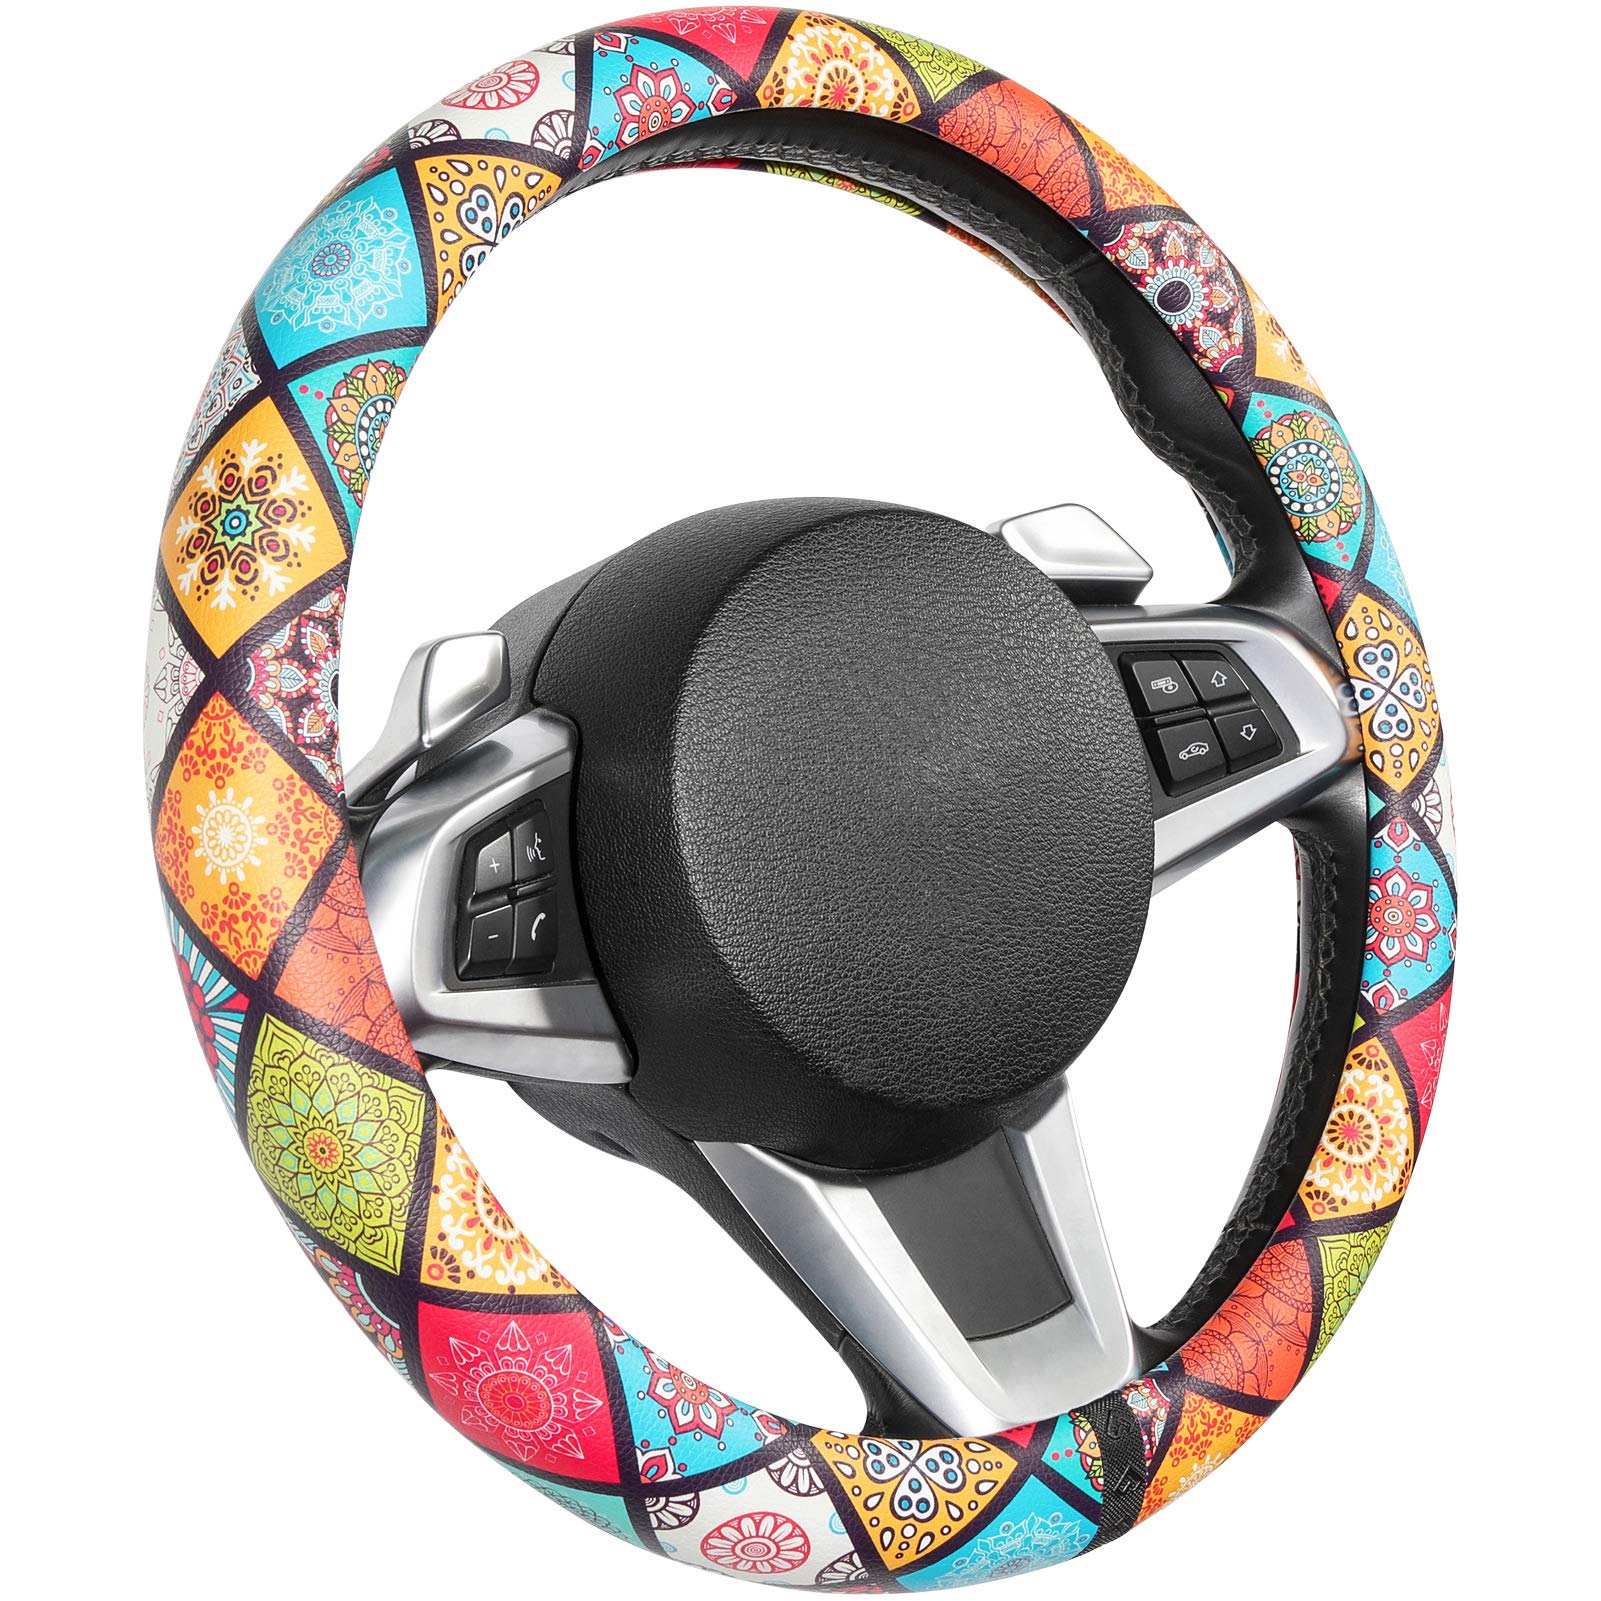 SEG Direct Mandala Lenkradbezug Auto Lenkradhülle Lenkrad Abdeckung aus Mikrofaser Leder für Frauen Mädchen, 37-39cm von SEG Direct